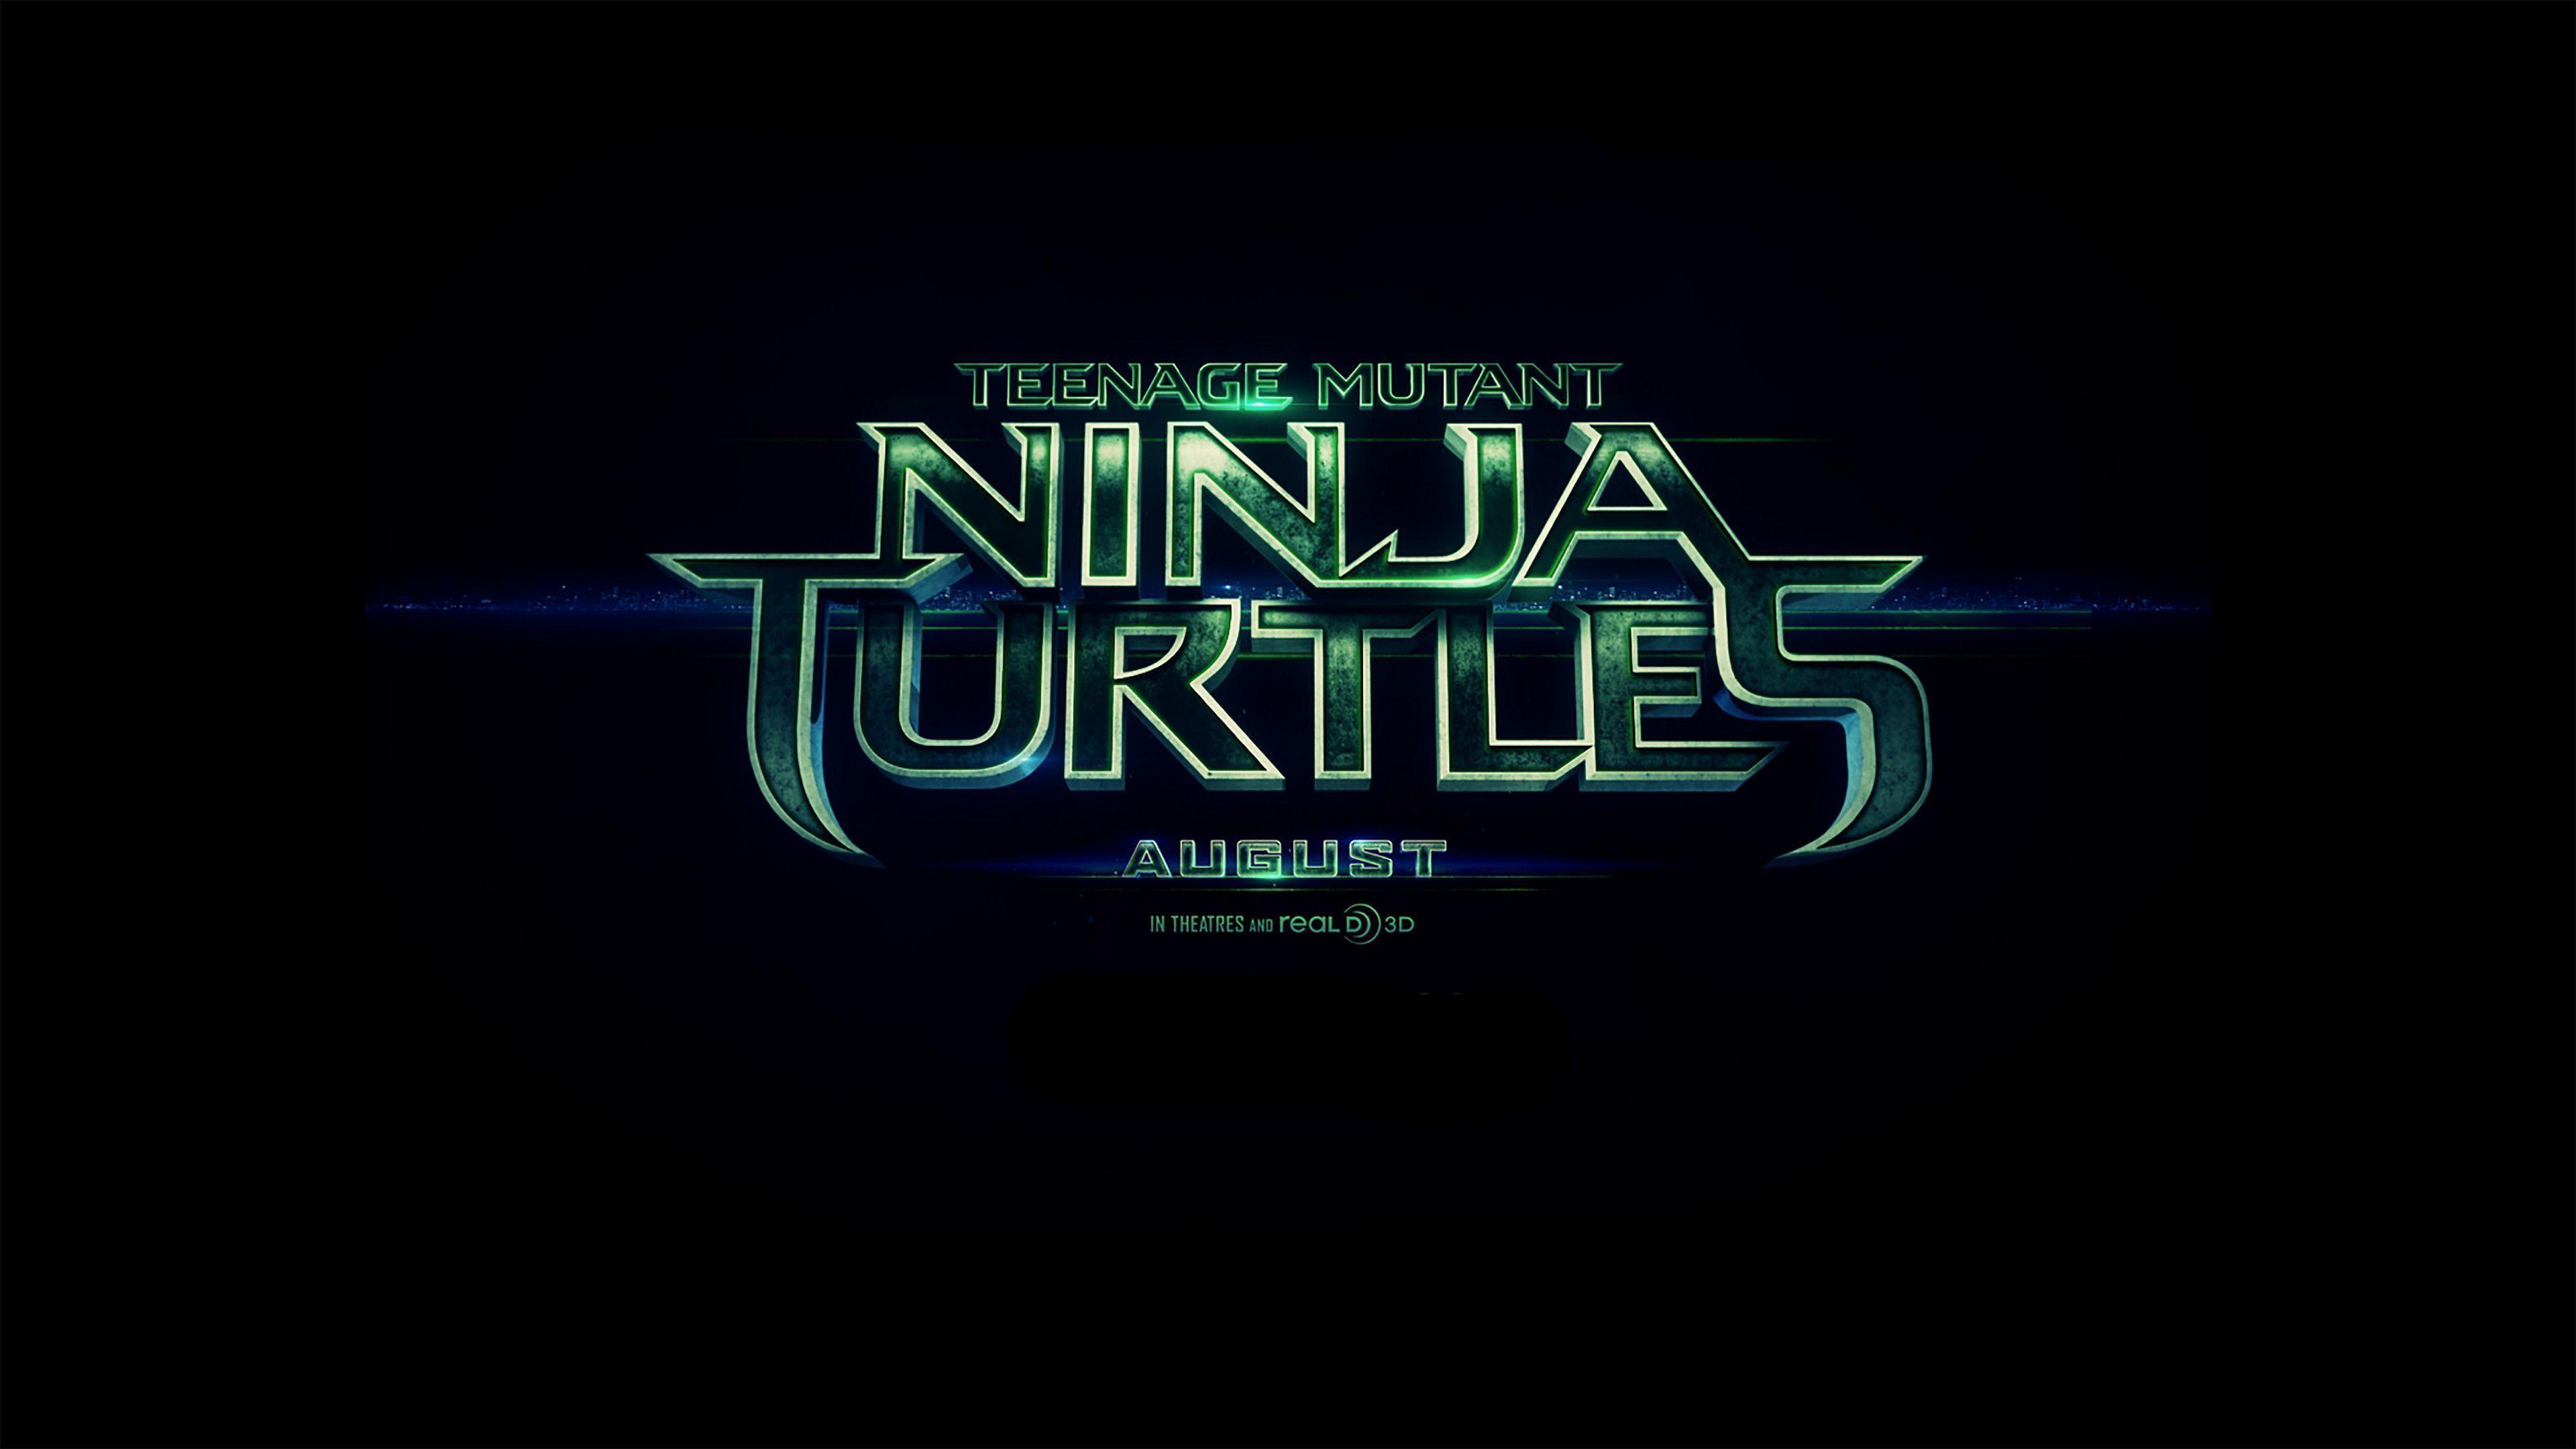 Download Wallpaper 2015 Teenage Muntant Ninja Turtles Movie Logo